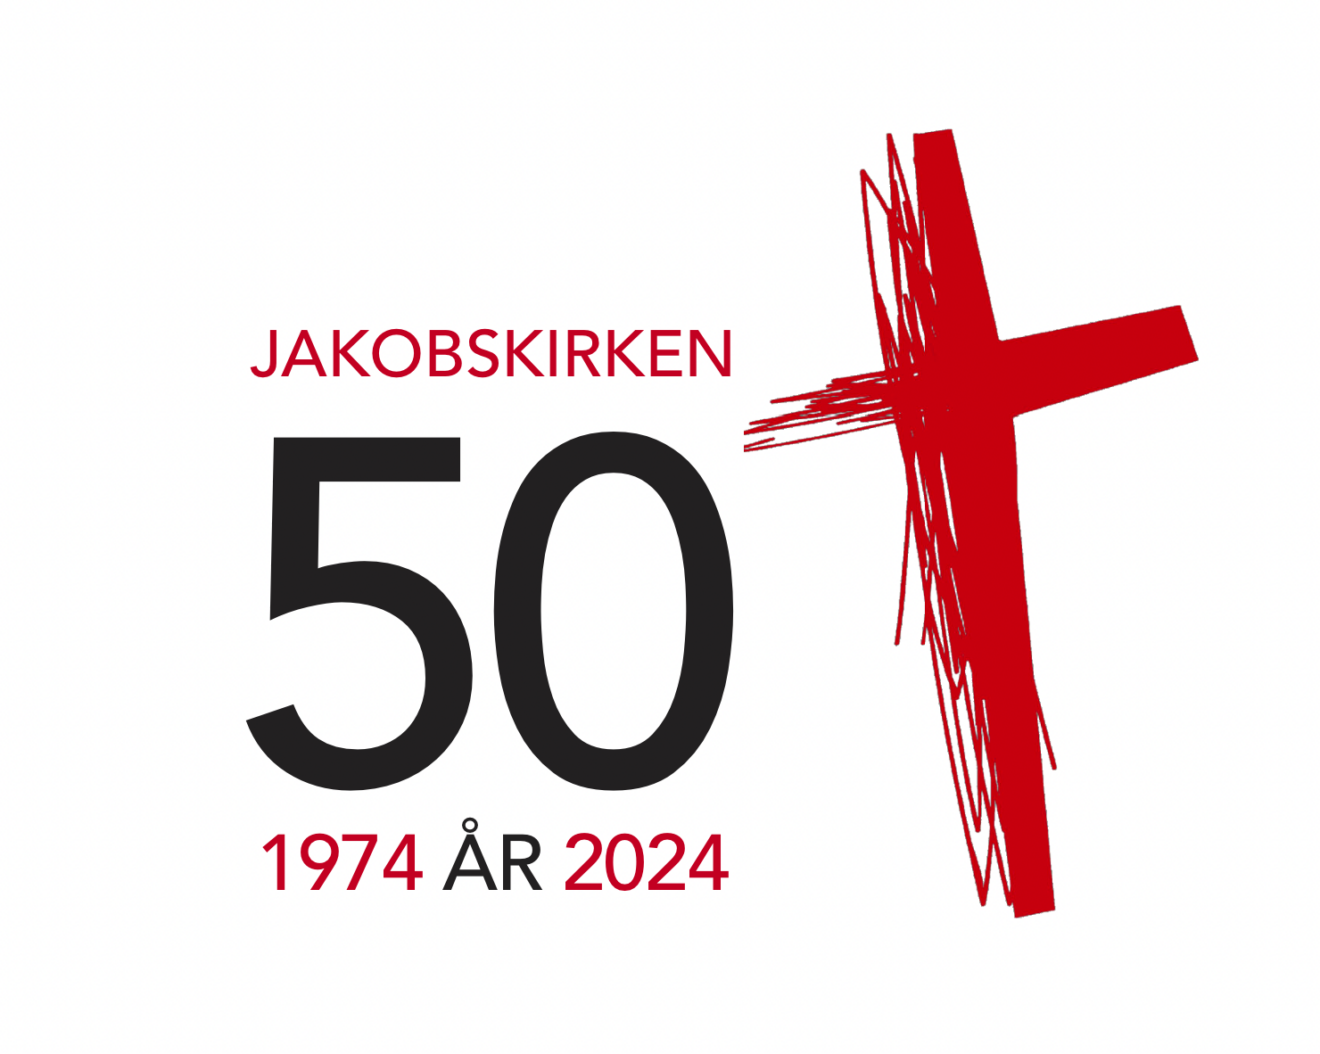 Jakobskirken i Roskilde fejrer 50-års jubilæum